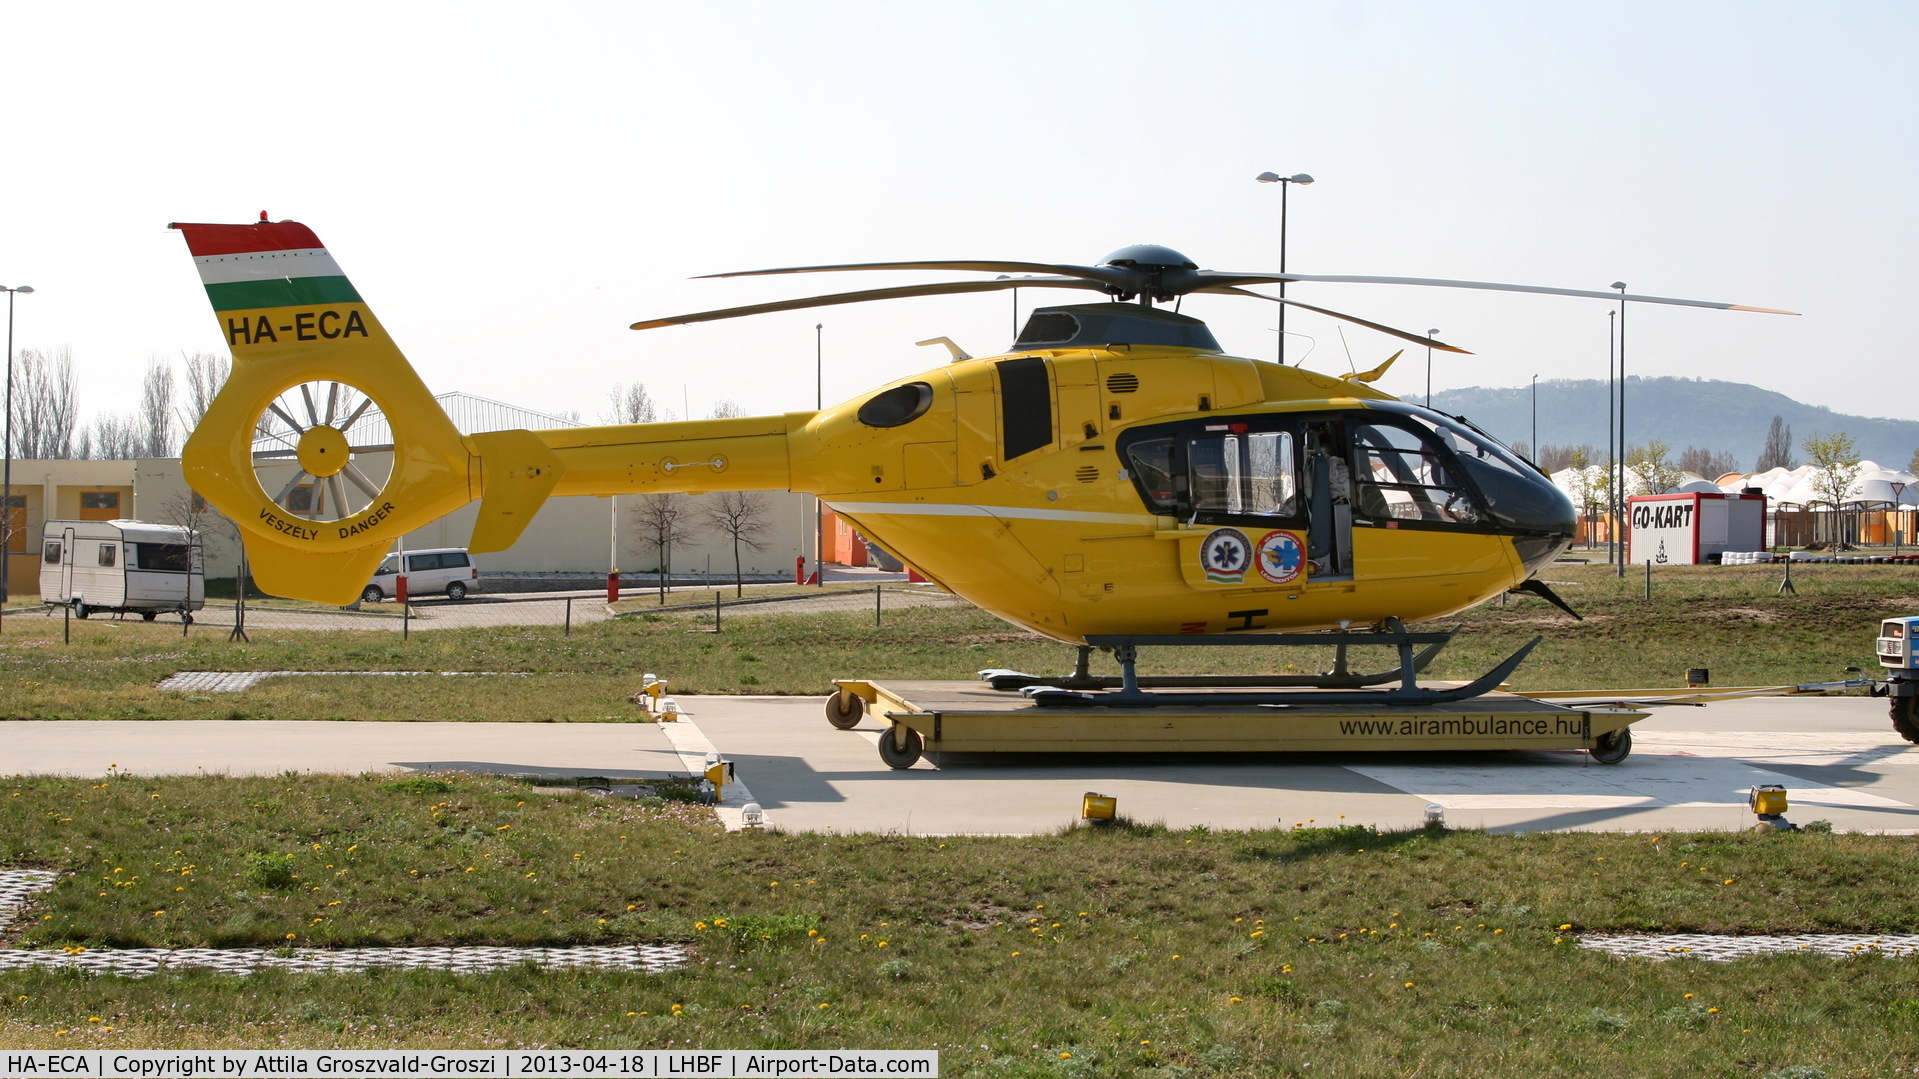 HA-ECA, 2006 Eurocopter EC-135T-2 C/N 0500, Balatonfüred Air Ambulance Base, Hungary